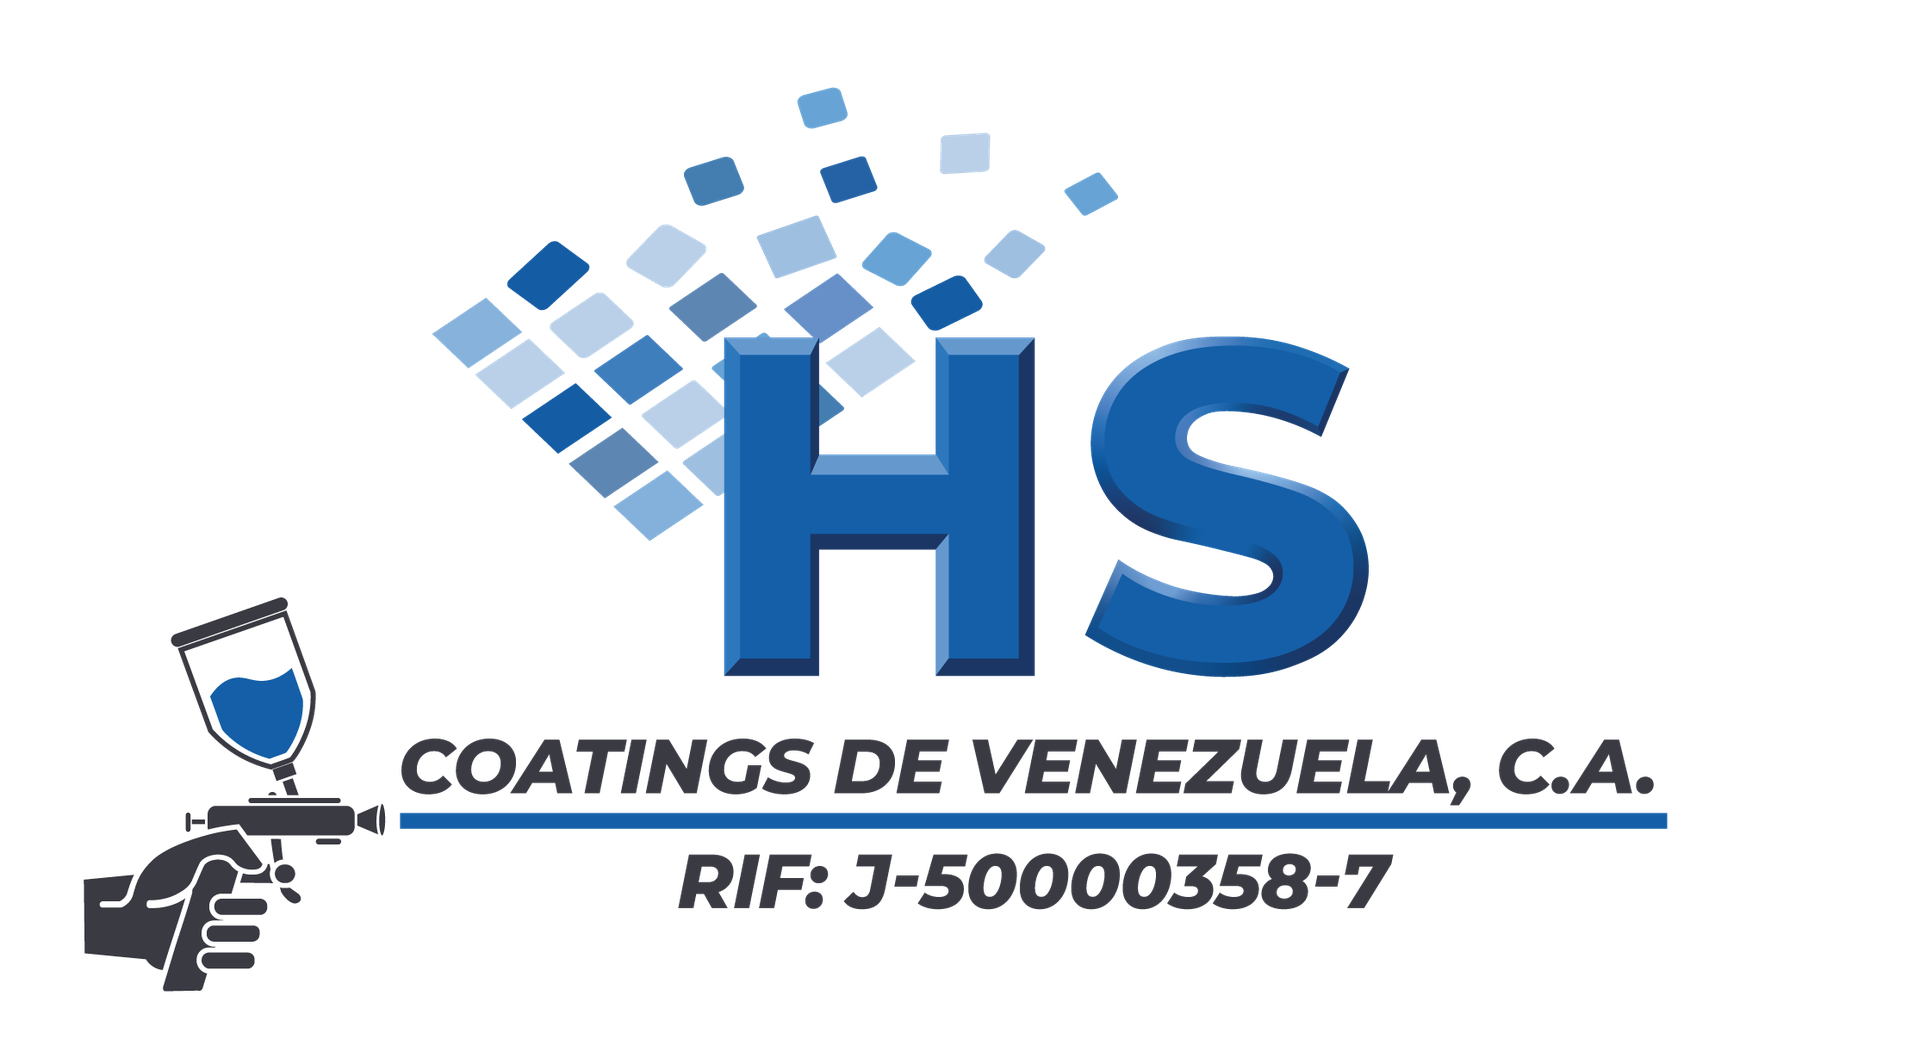 H.S. Coatings de Venezuela, C.A